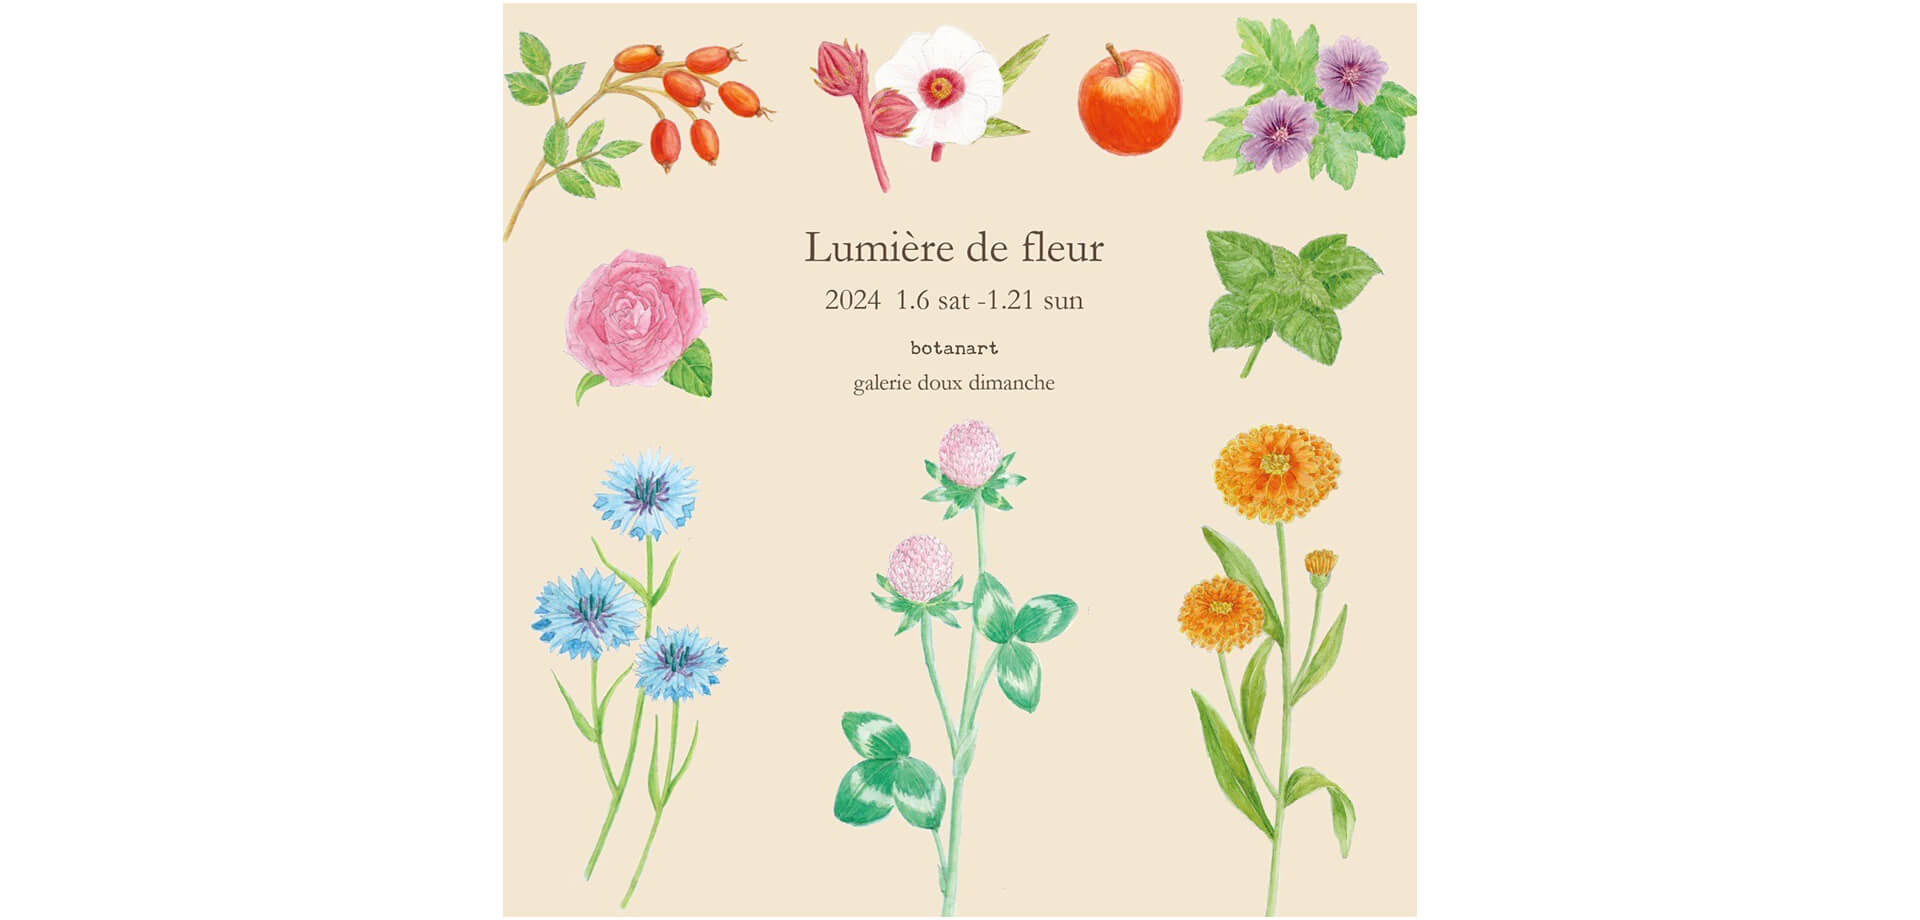 botanart Lumière de fleur -優しい光- バナー